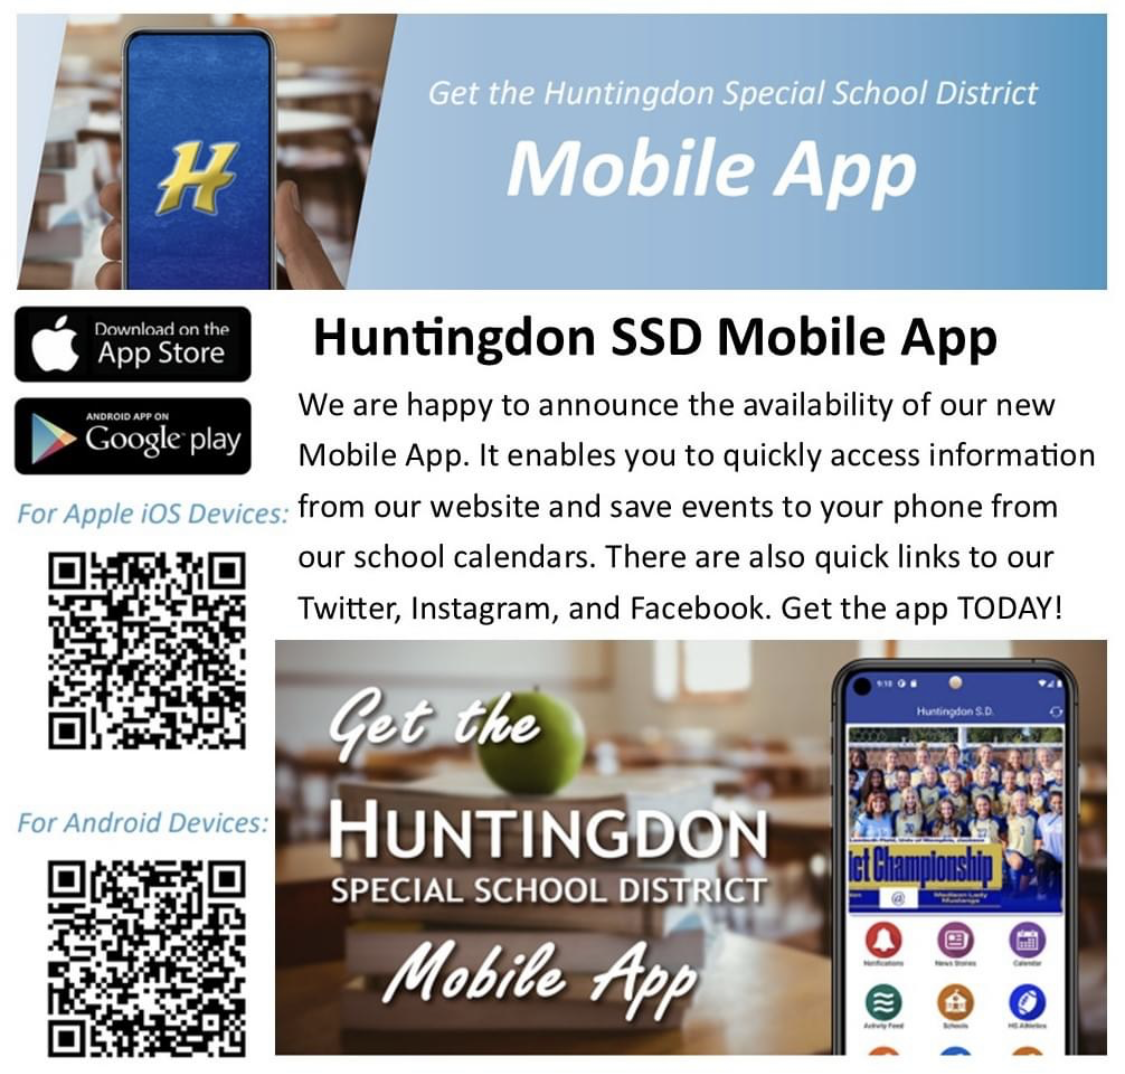 HSSD Mobile App